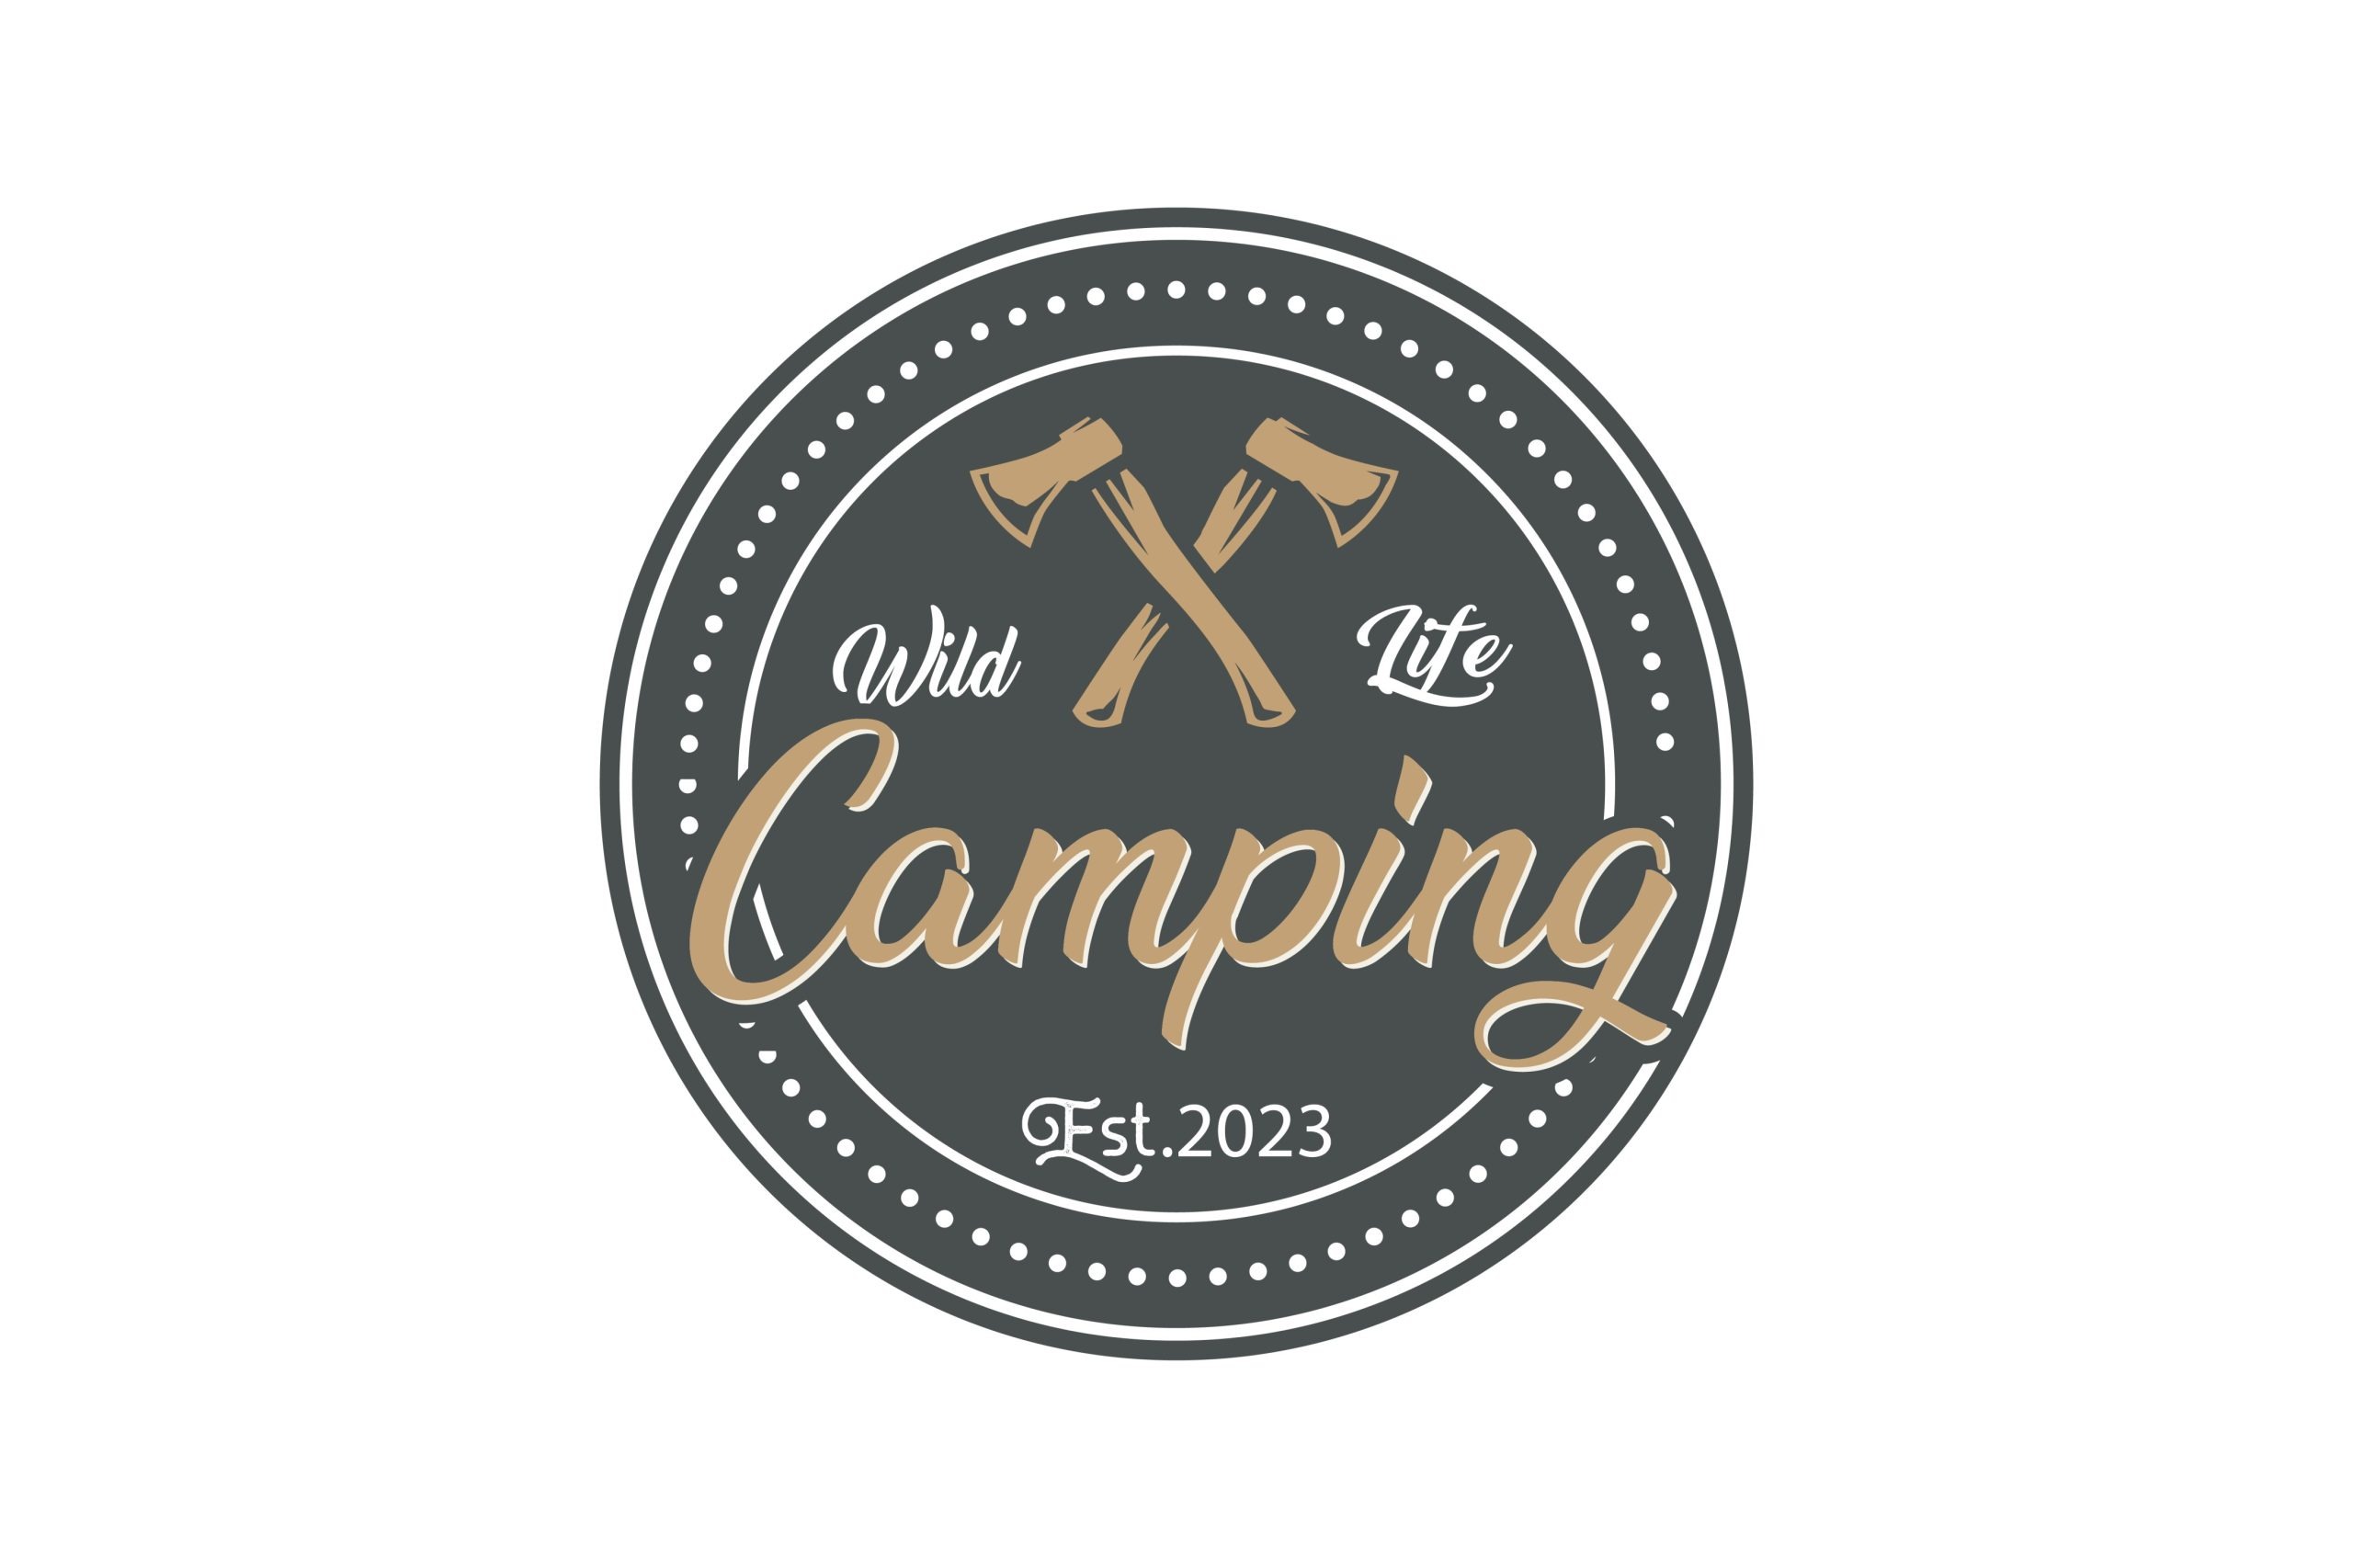 Camping and outdoor adventure retro logo